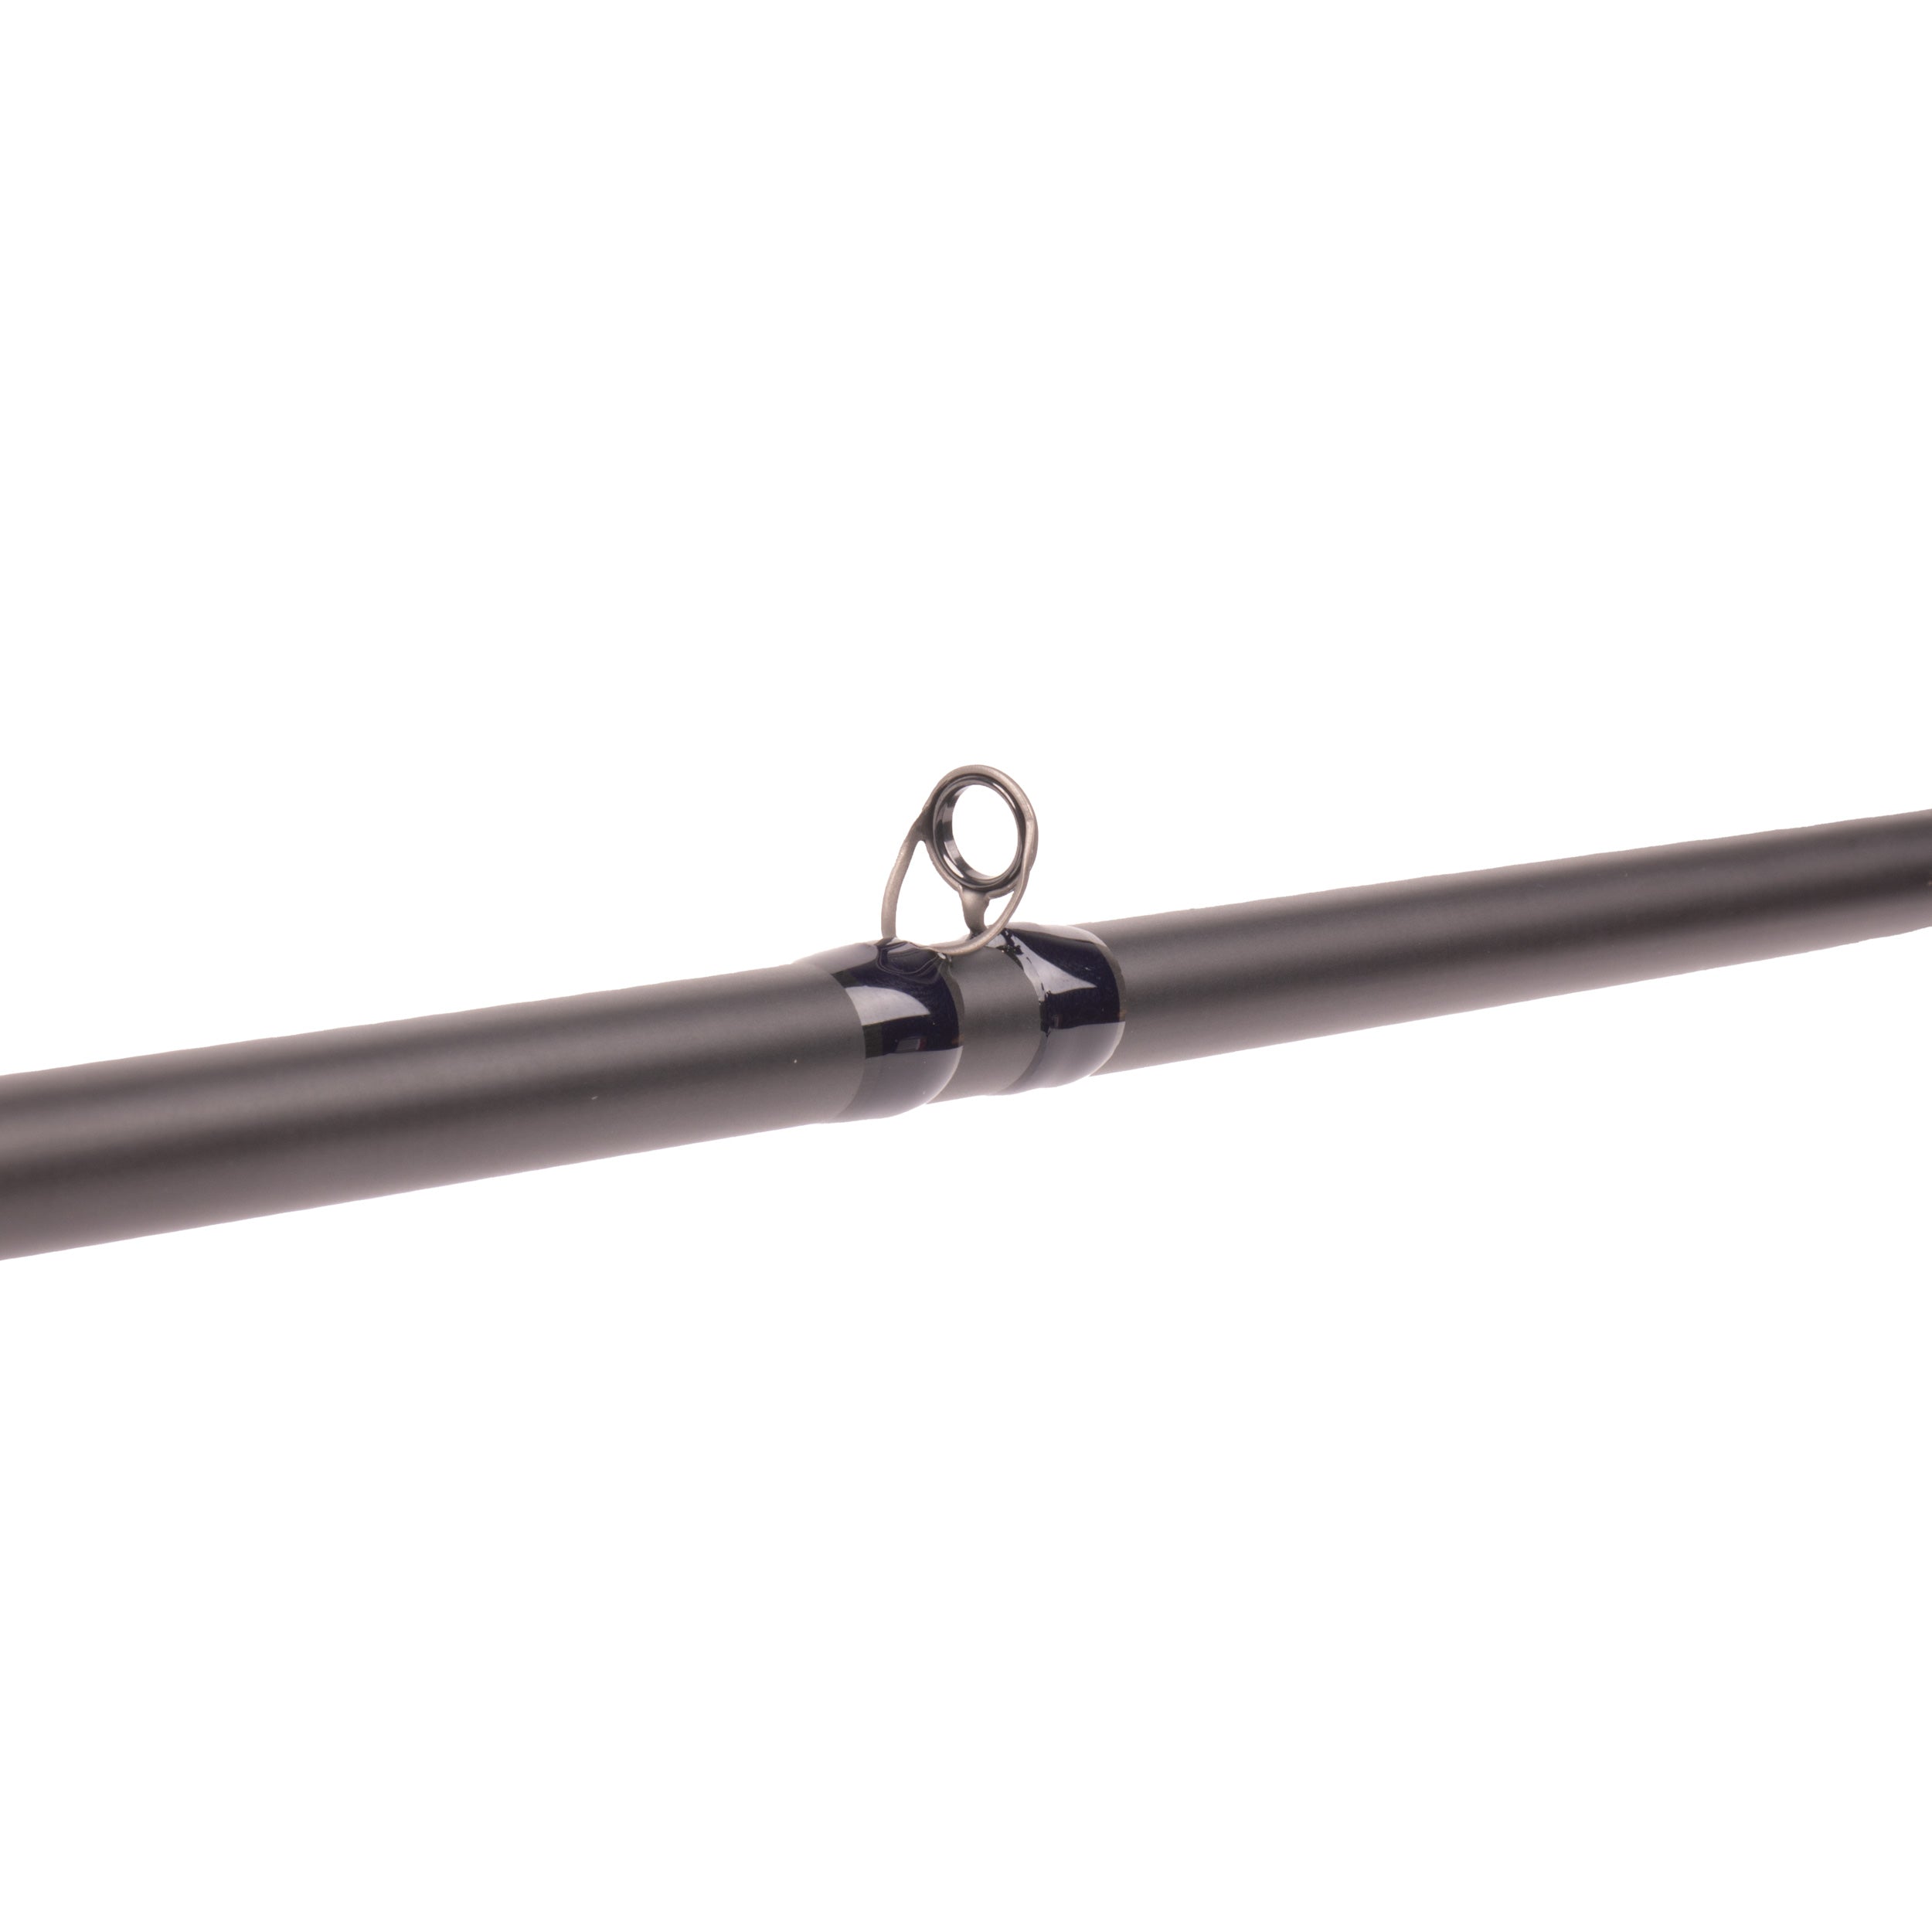 Aluminum Fishing Rod Components